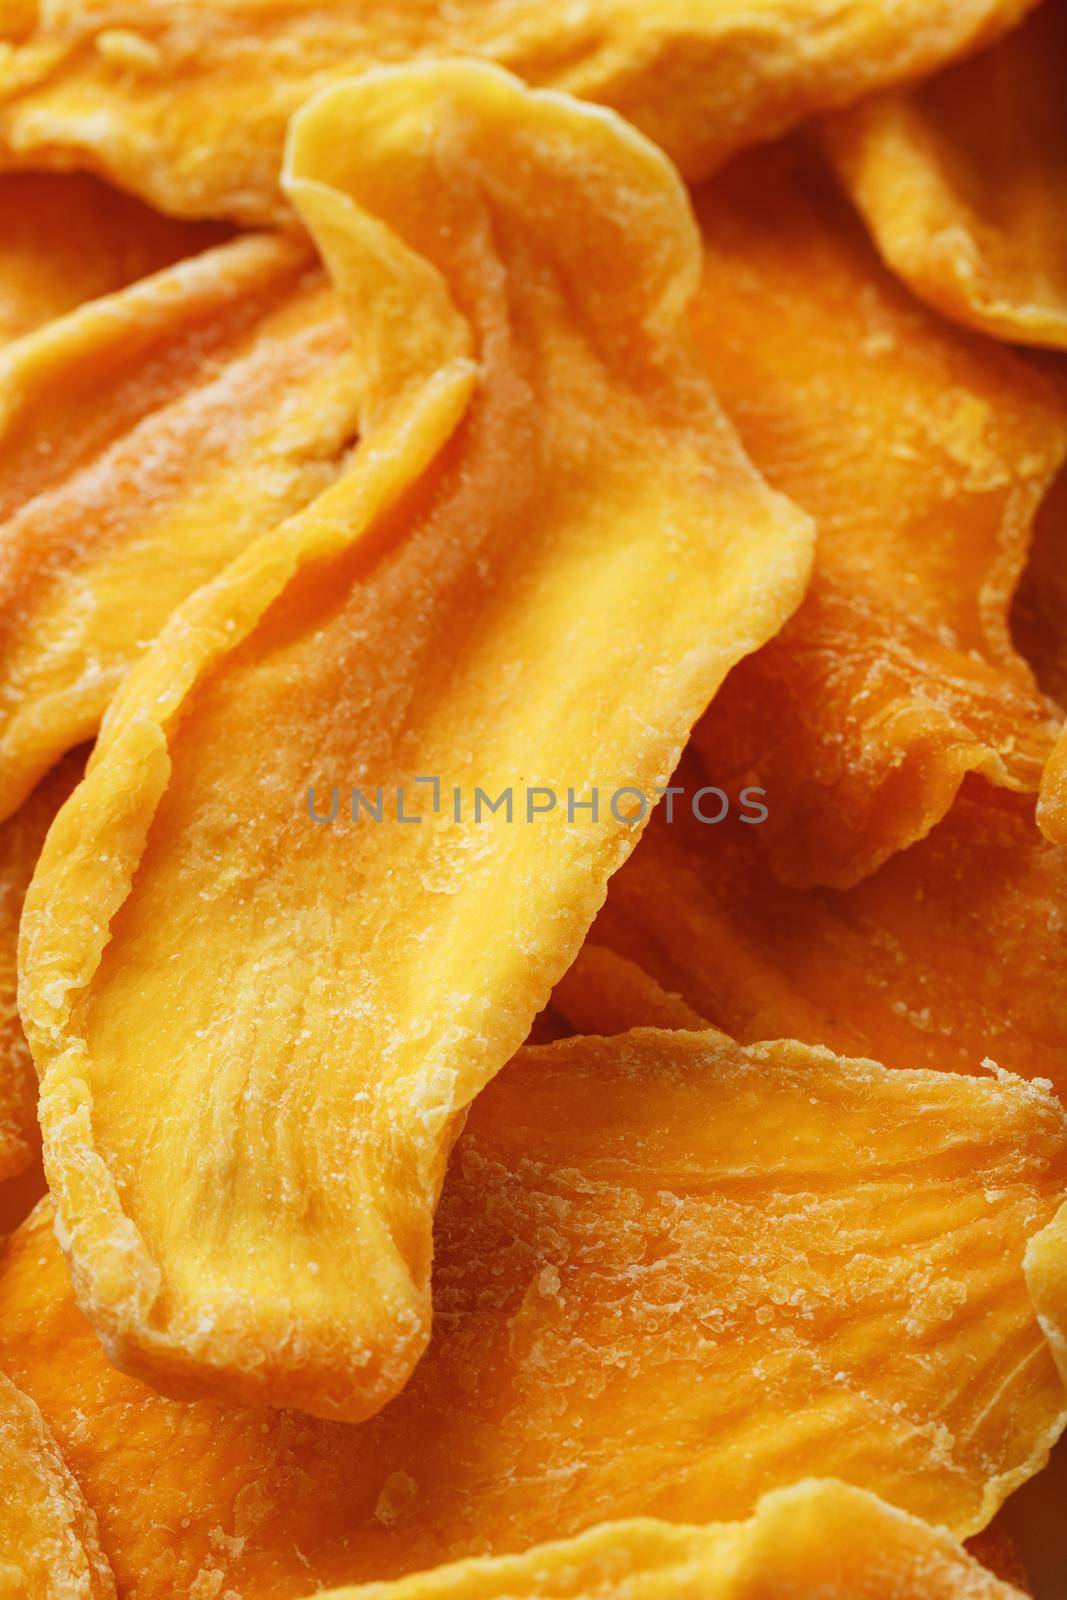 Dried sweet mango fruit slices as textural orange by AlexGrec